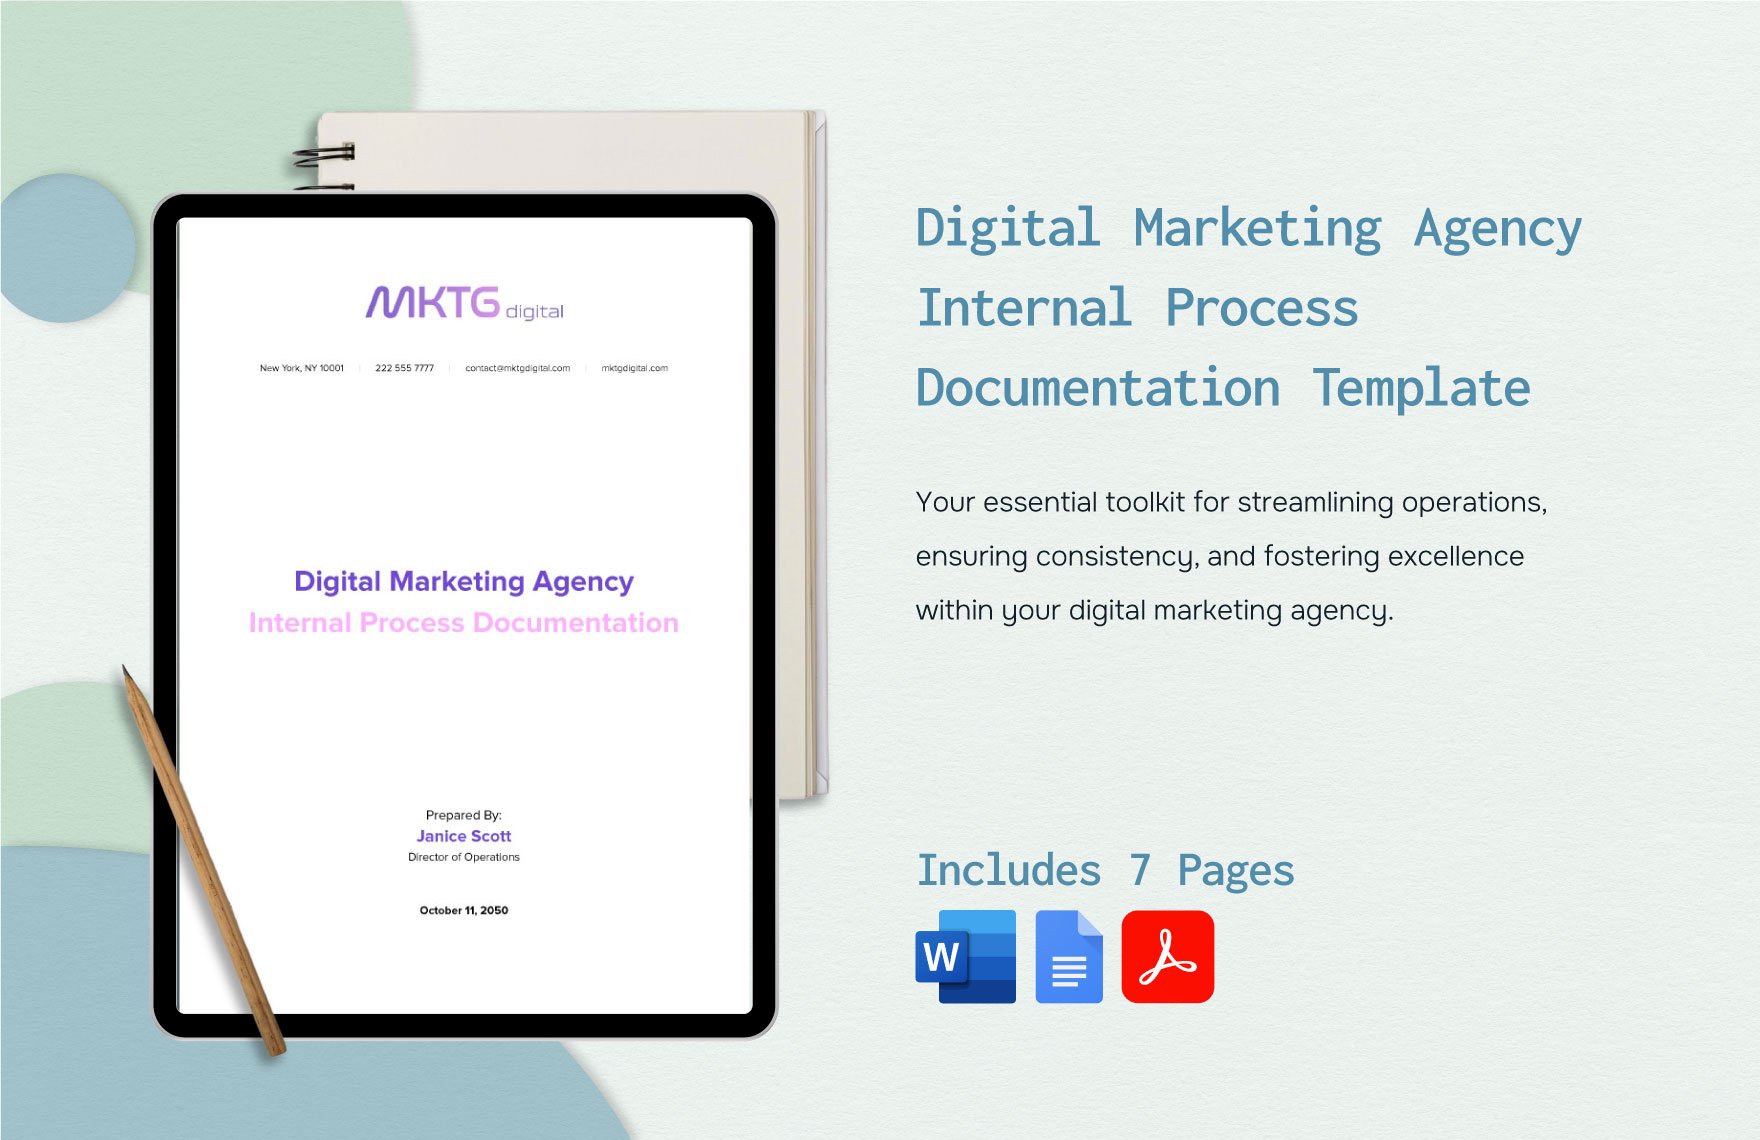 Digital Marketing Agency Internal Process Documentation Template